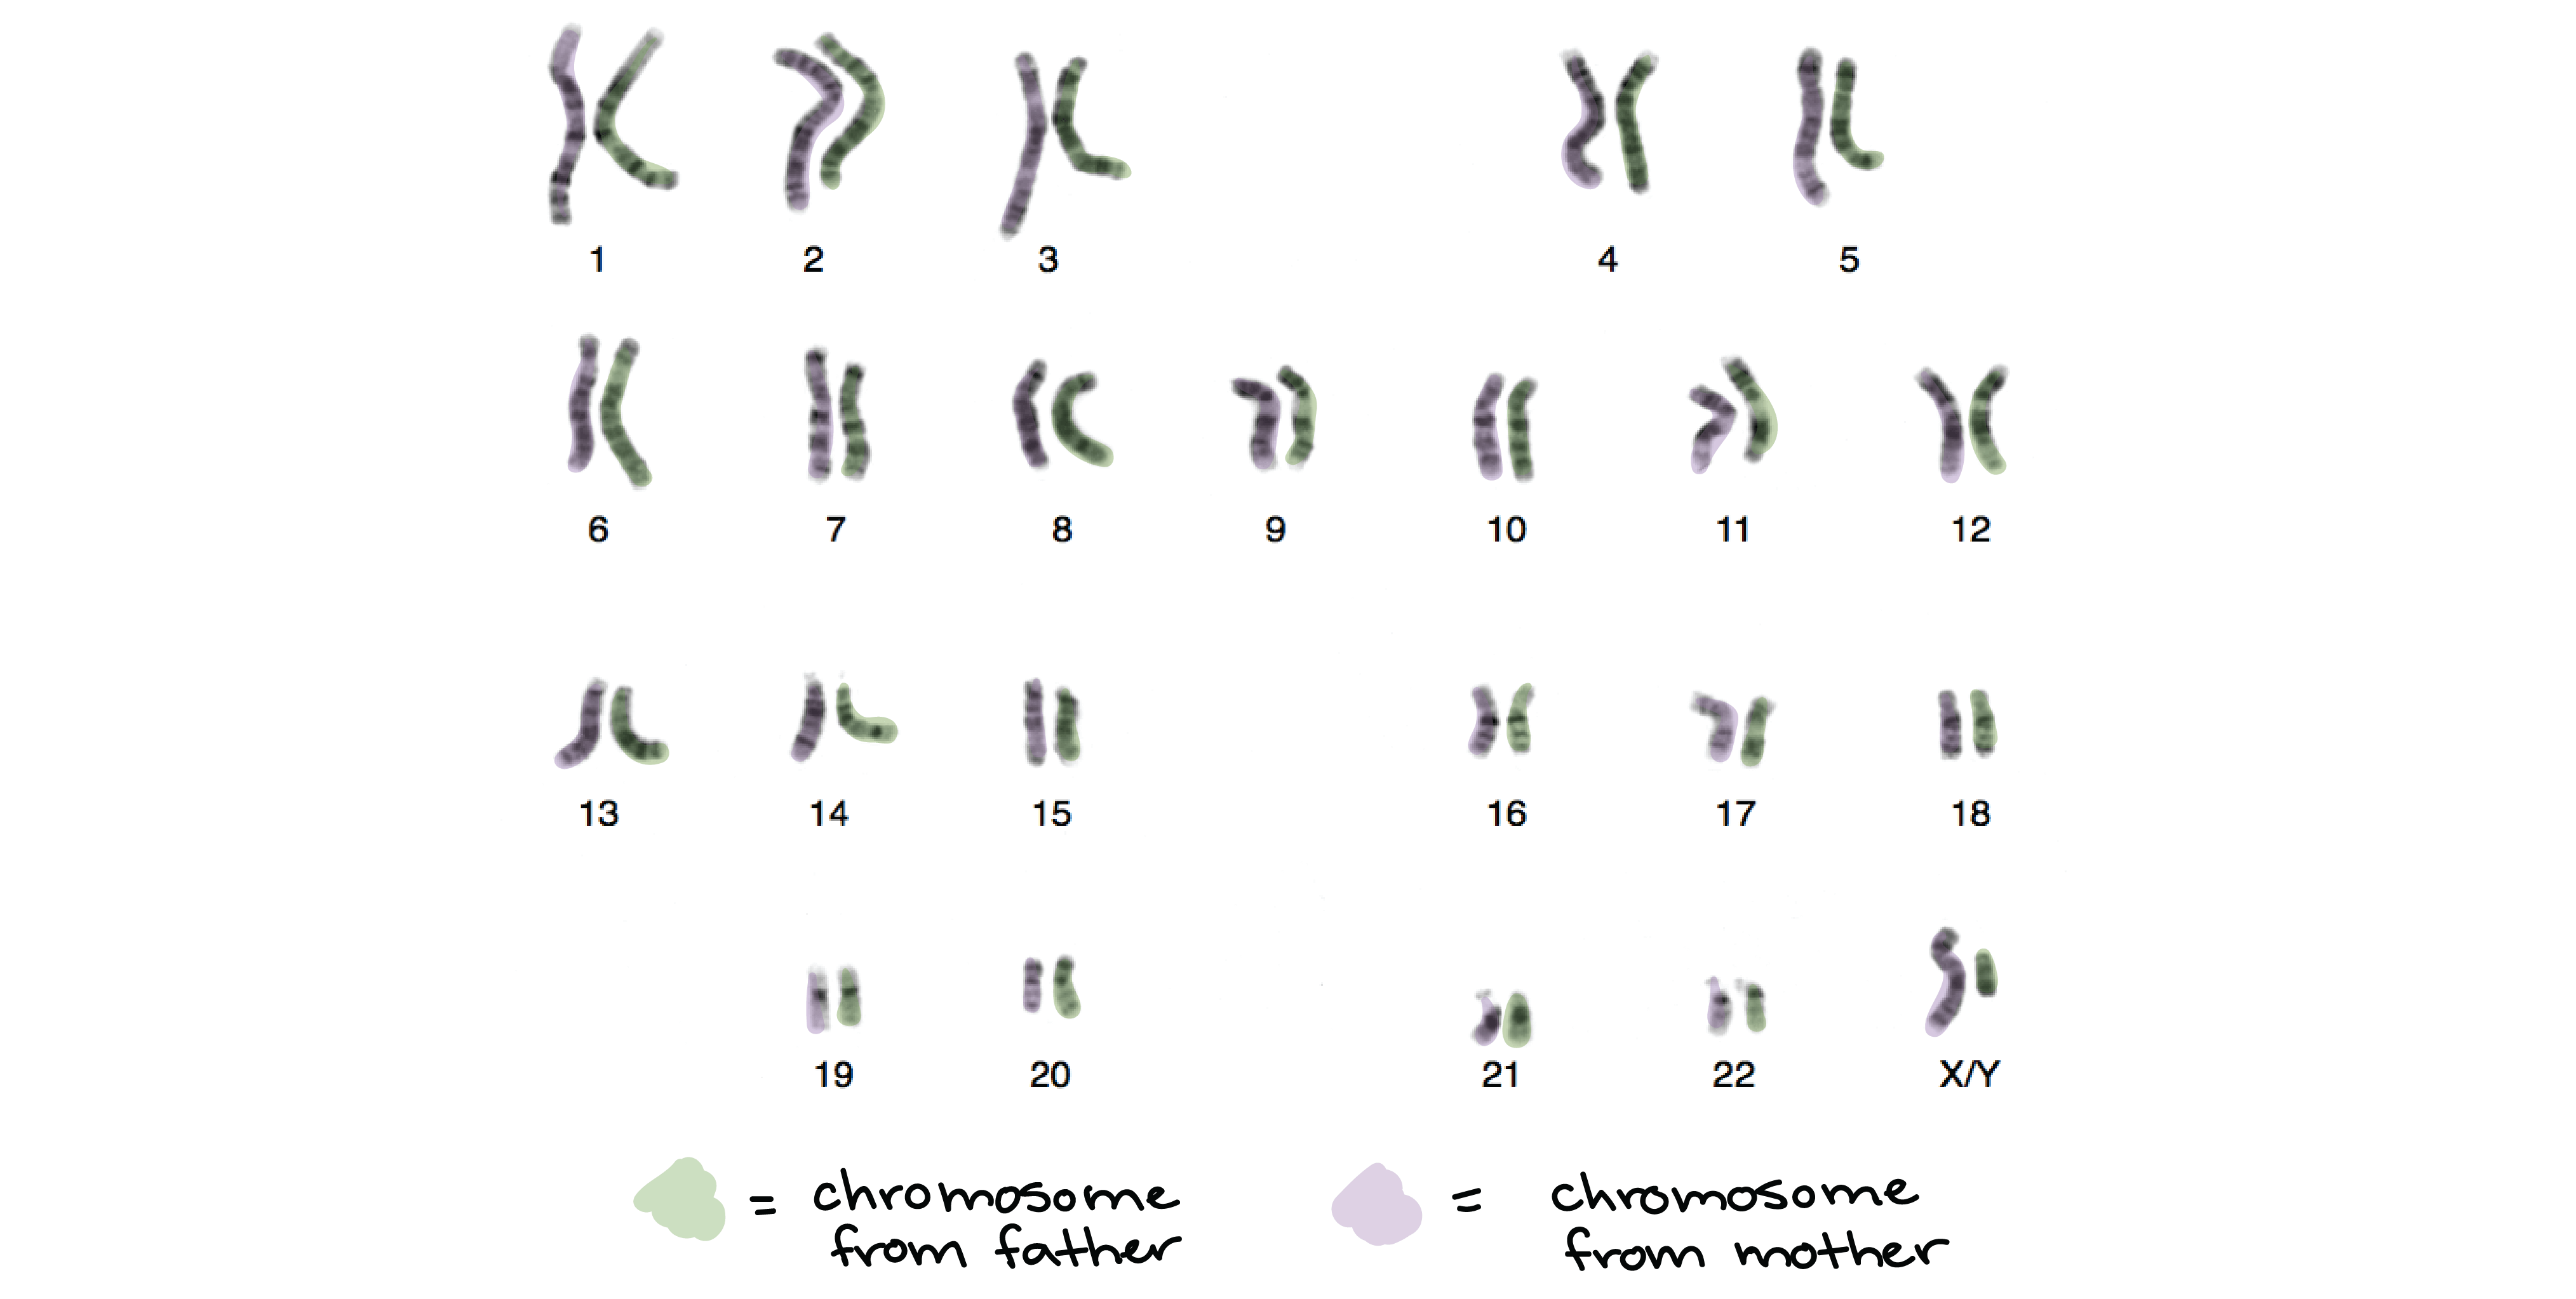 Chromosomes combination